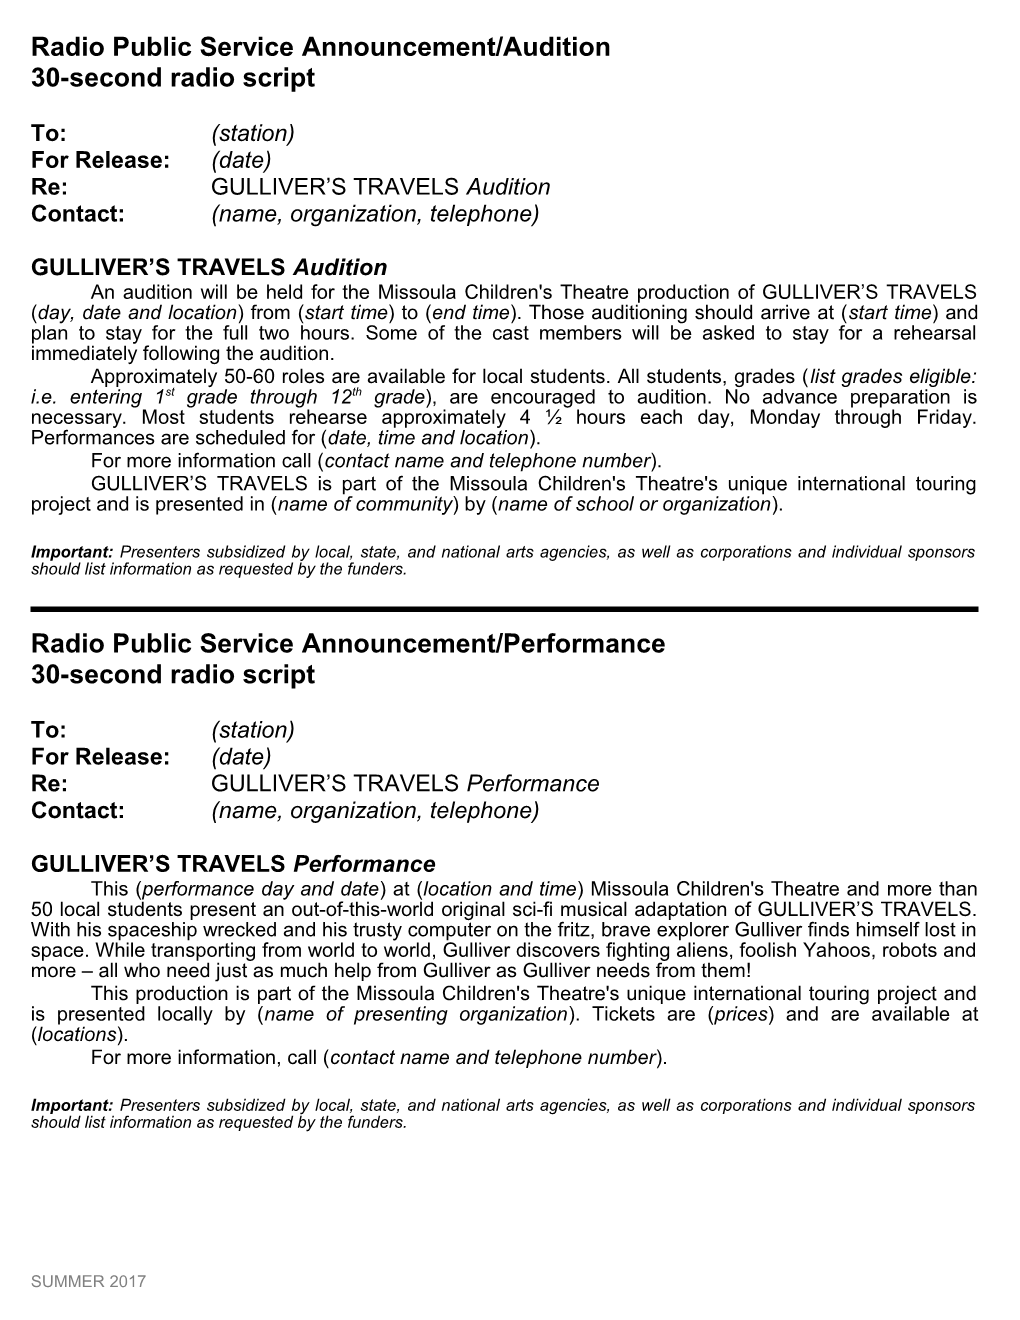 Radio Public Service Announcement/Auditions s2